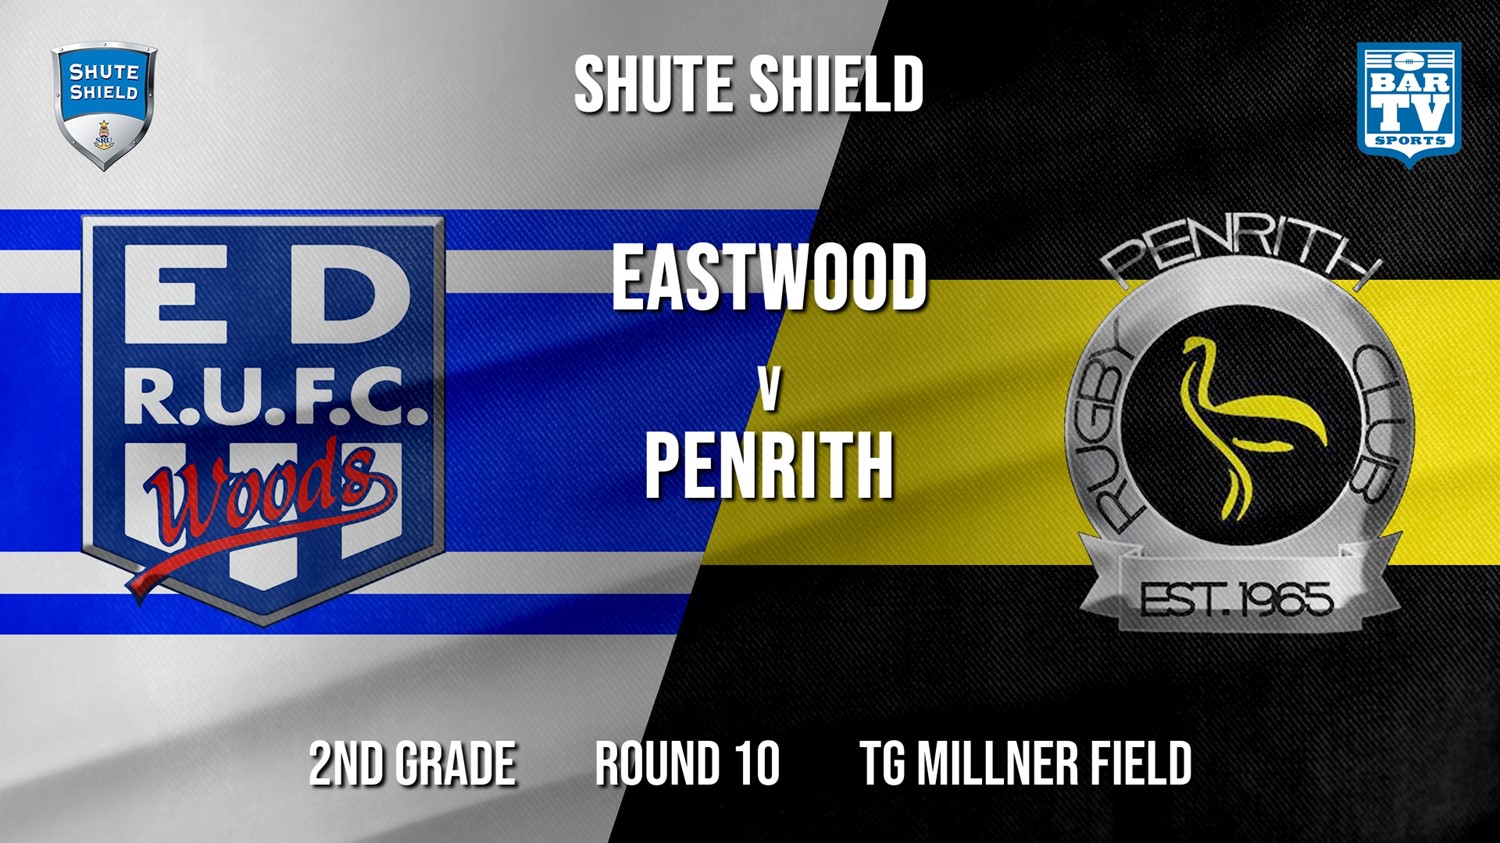 Shute Shield Round 10 - 2nd Grade - Eastwood v Penrith Emus Minigame Slate Image